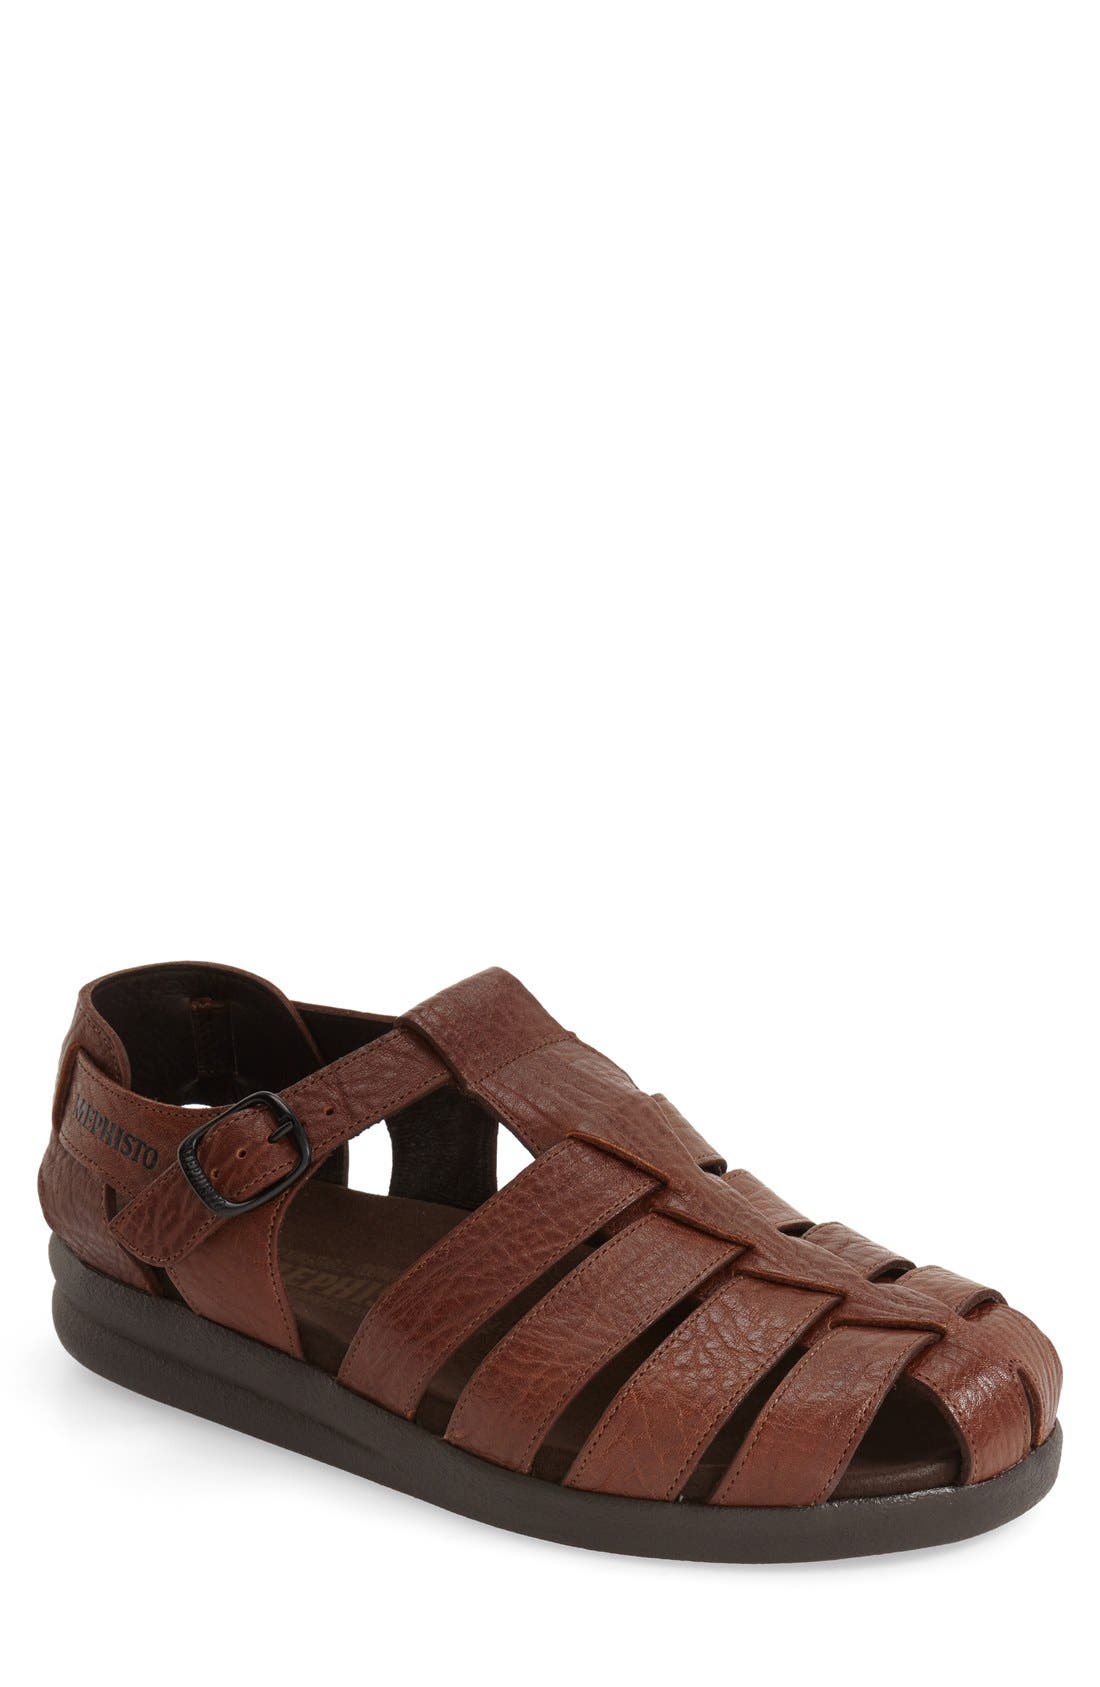 mephisto sandals on sale